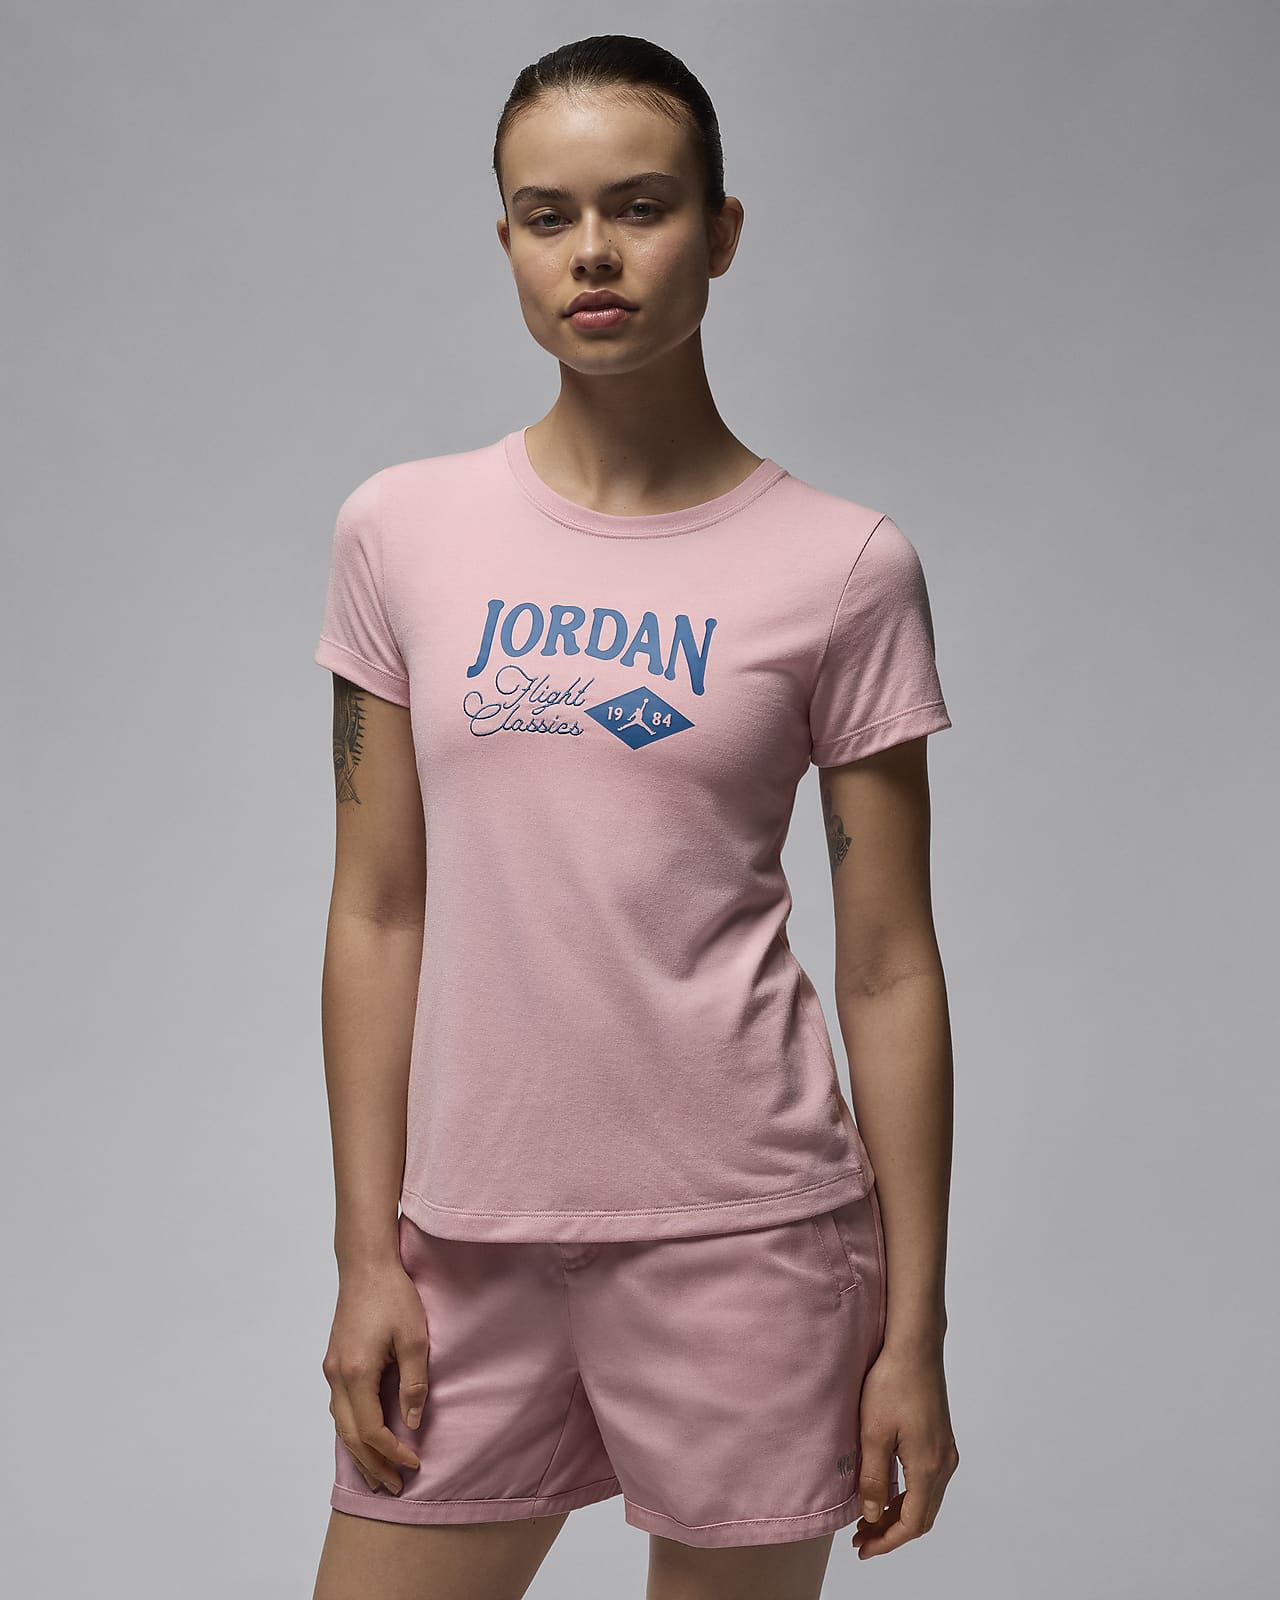 T-shirt damski o dopasowanym kroju z nadrukiem Jordan